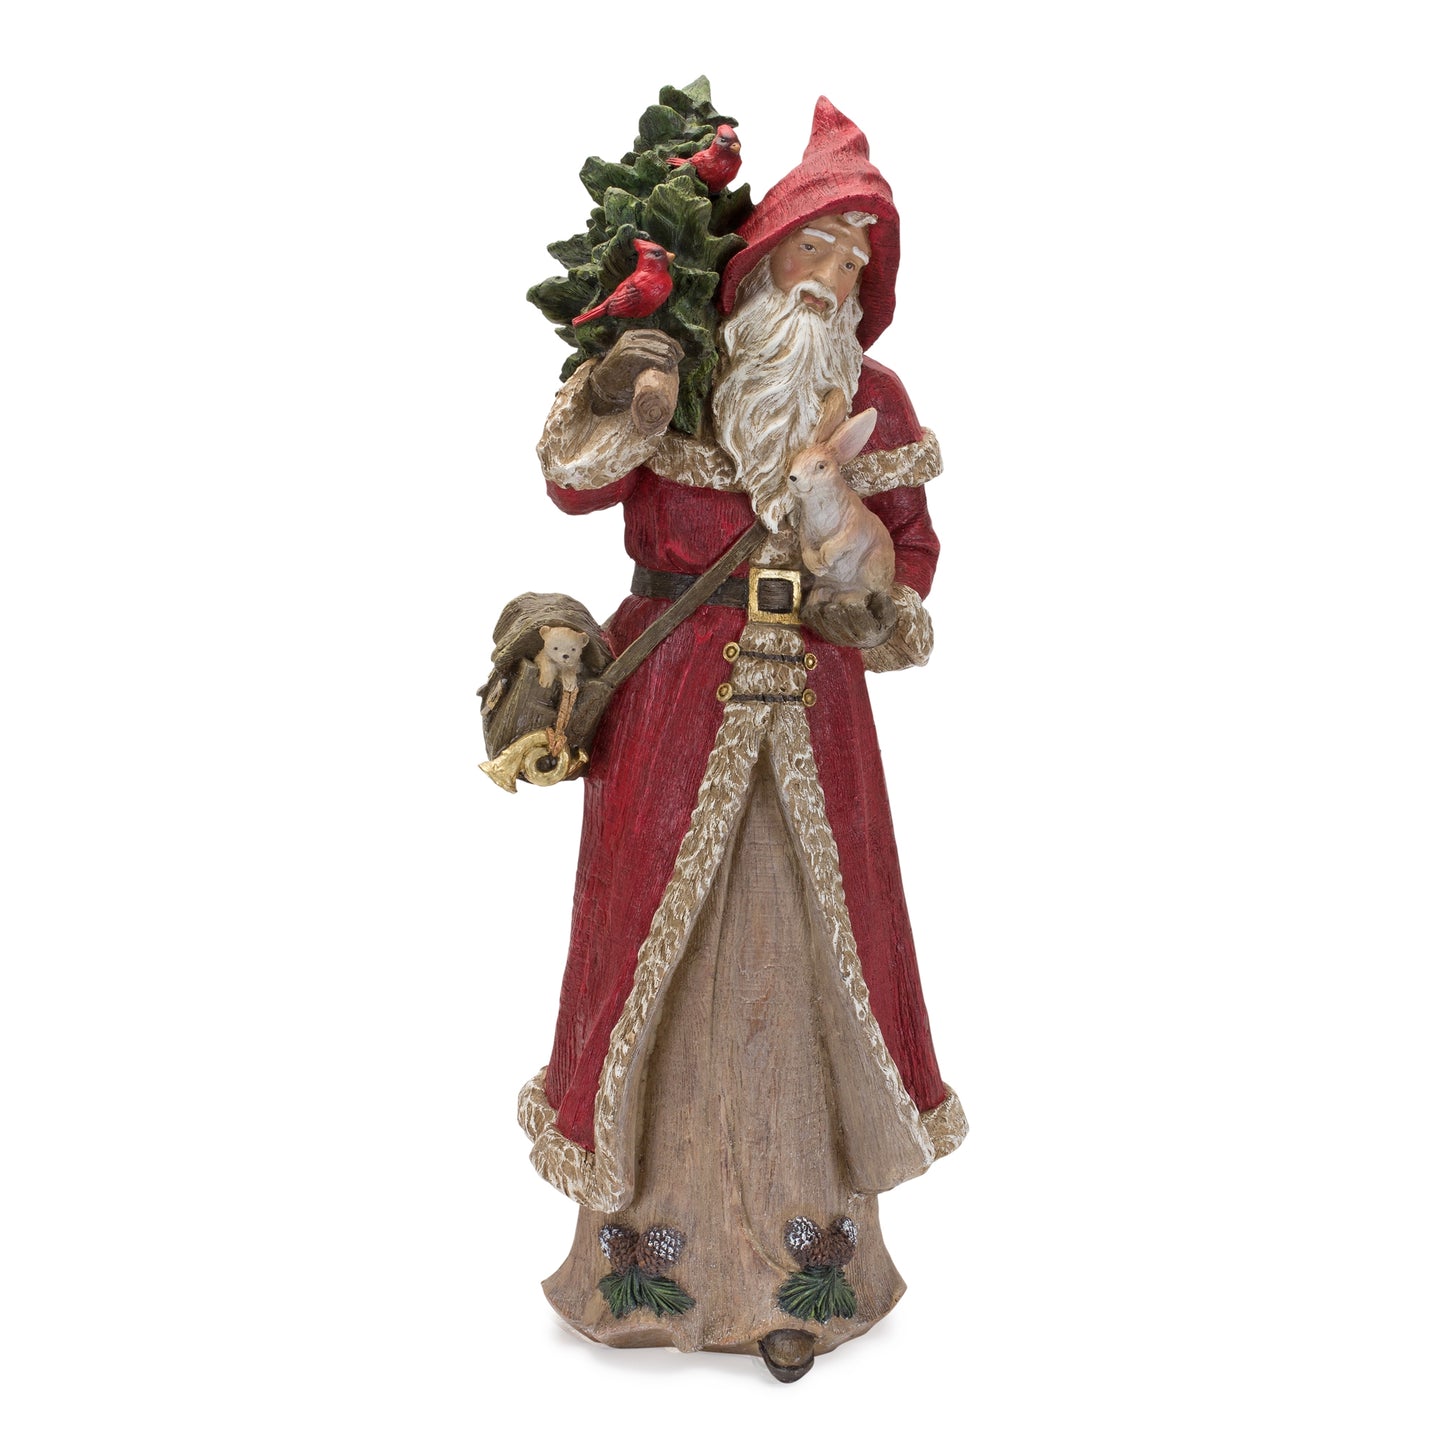 Rustic Stone Santa Figurine with Cardinal Bird and Animals (Set of 2)